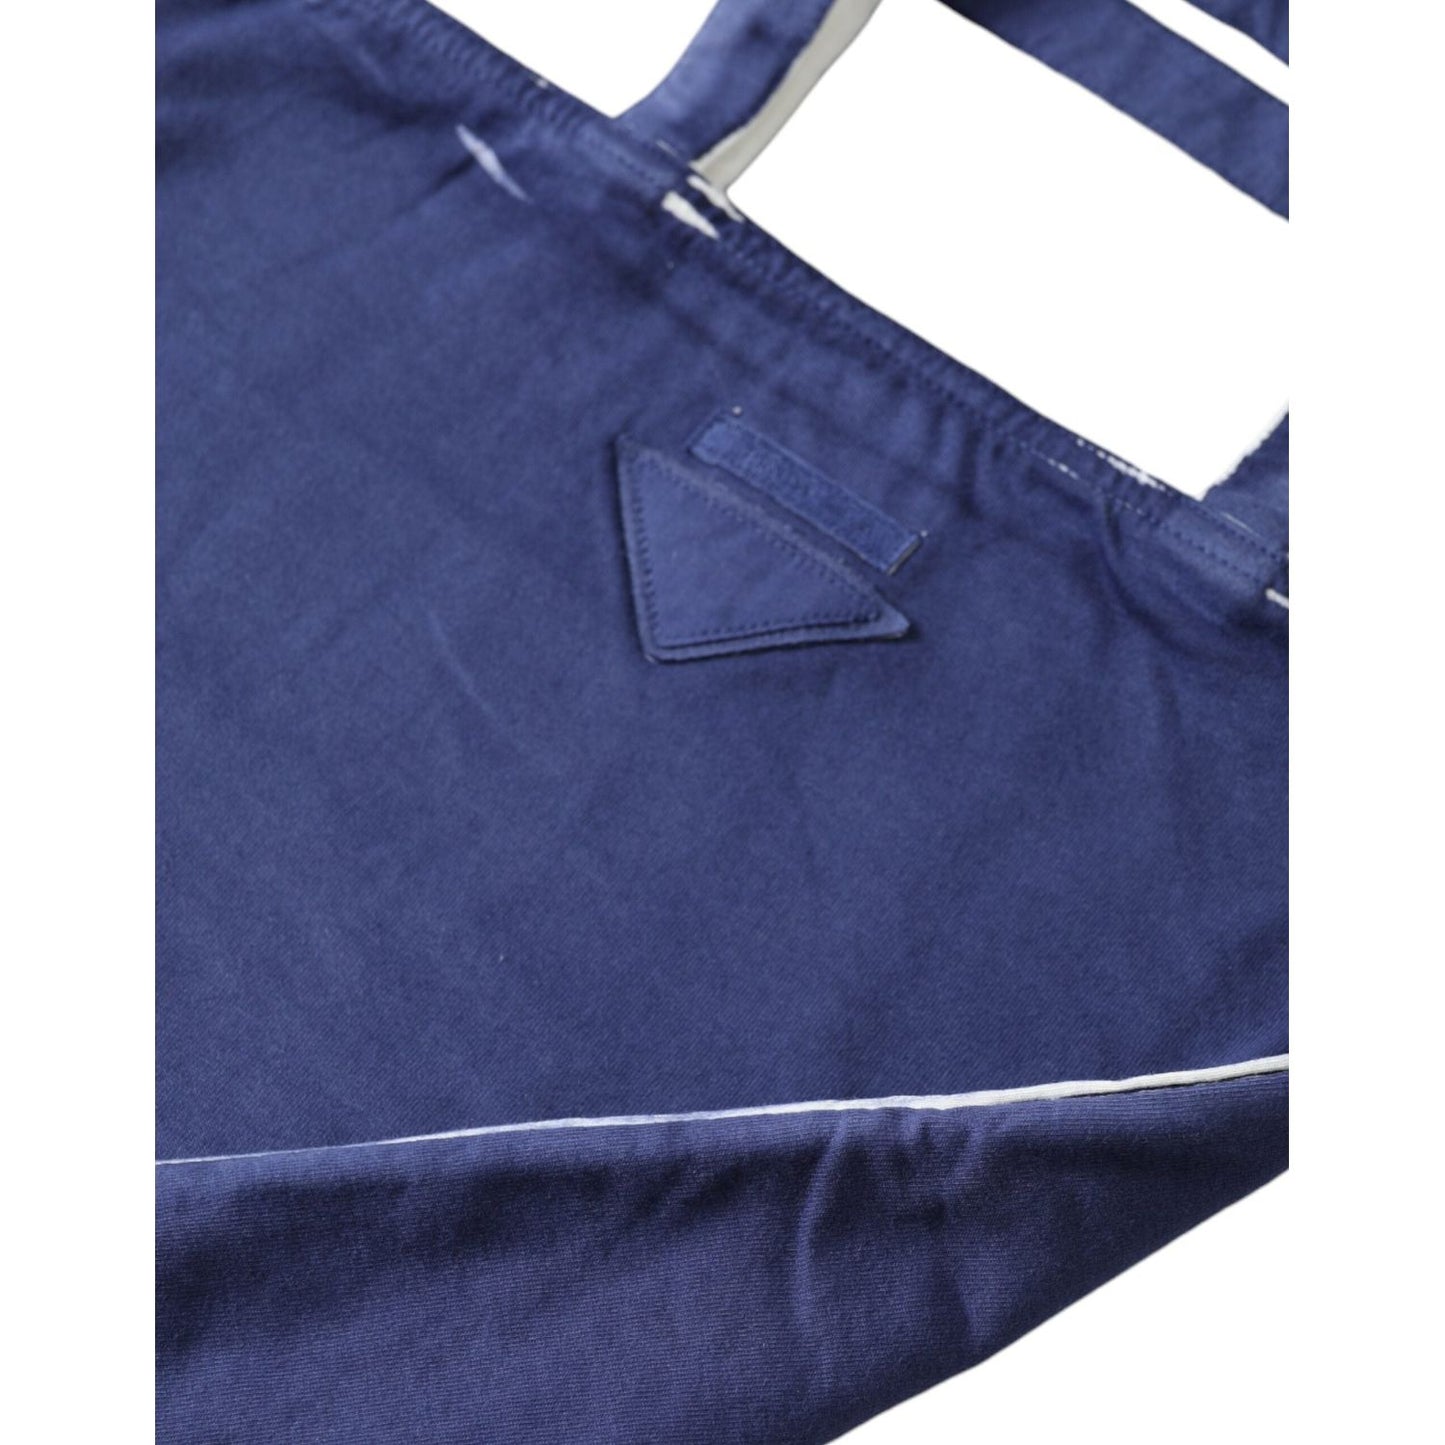 Prada Elegant Blue Tote Bag for Chic Outings elegant-blue-tote-bag-for-chic-outings